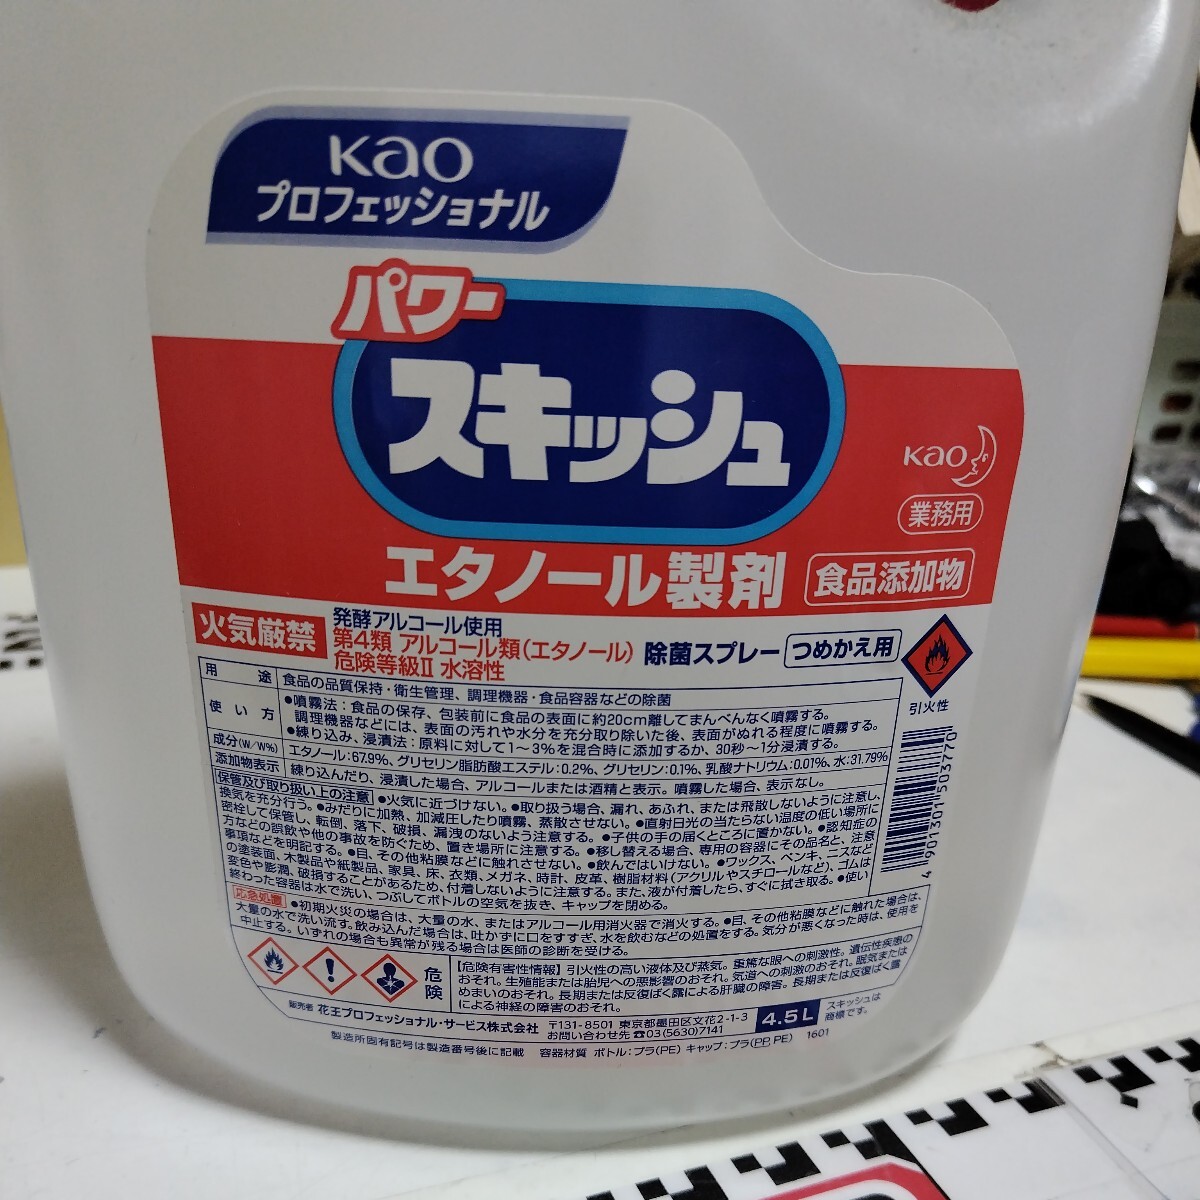  Kao Professional power skishu ethanol made .4.5 liter new goods unused 